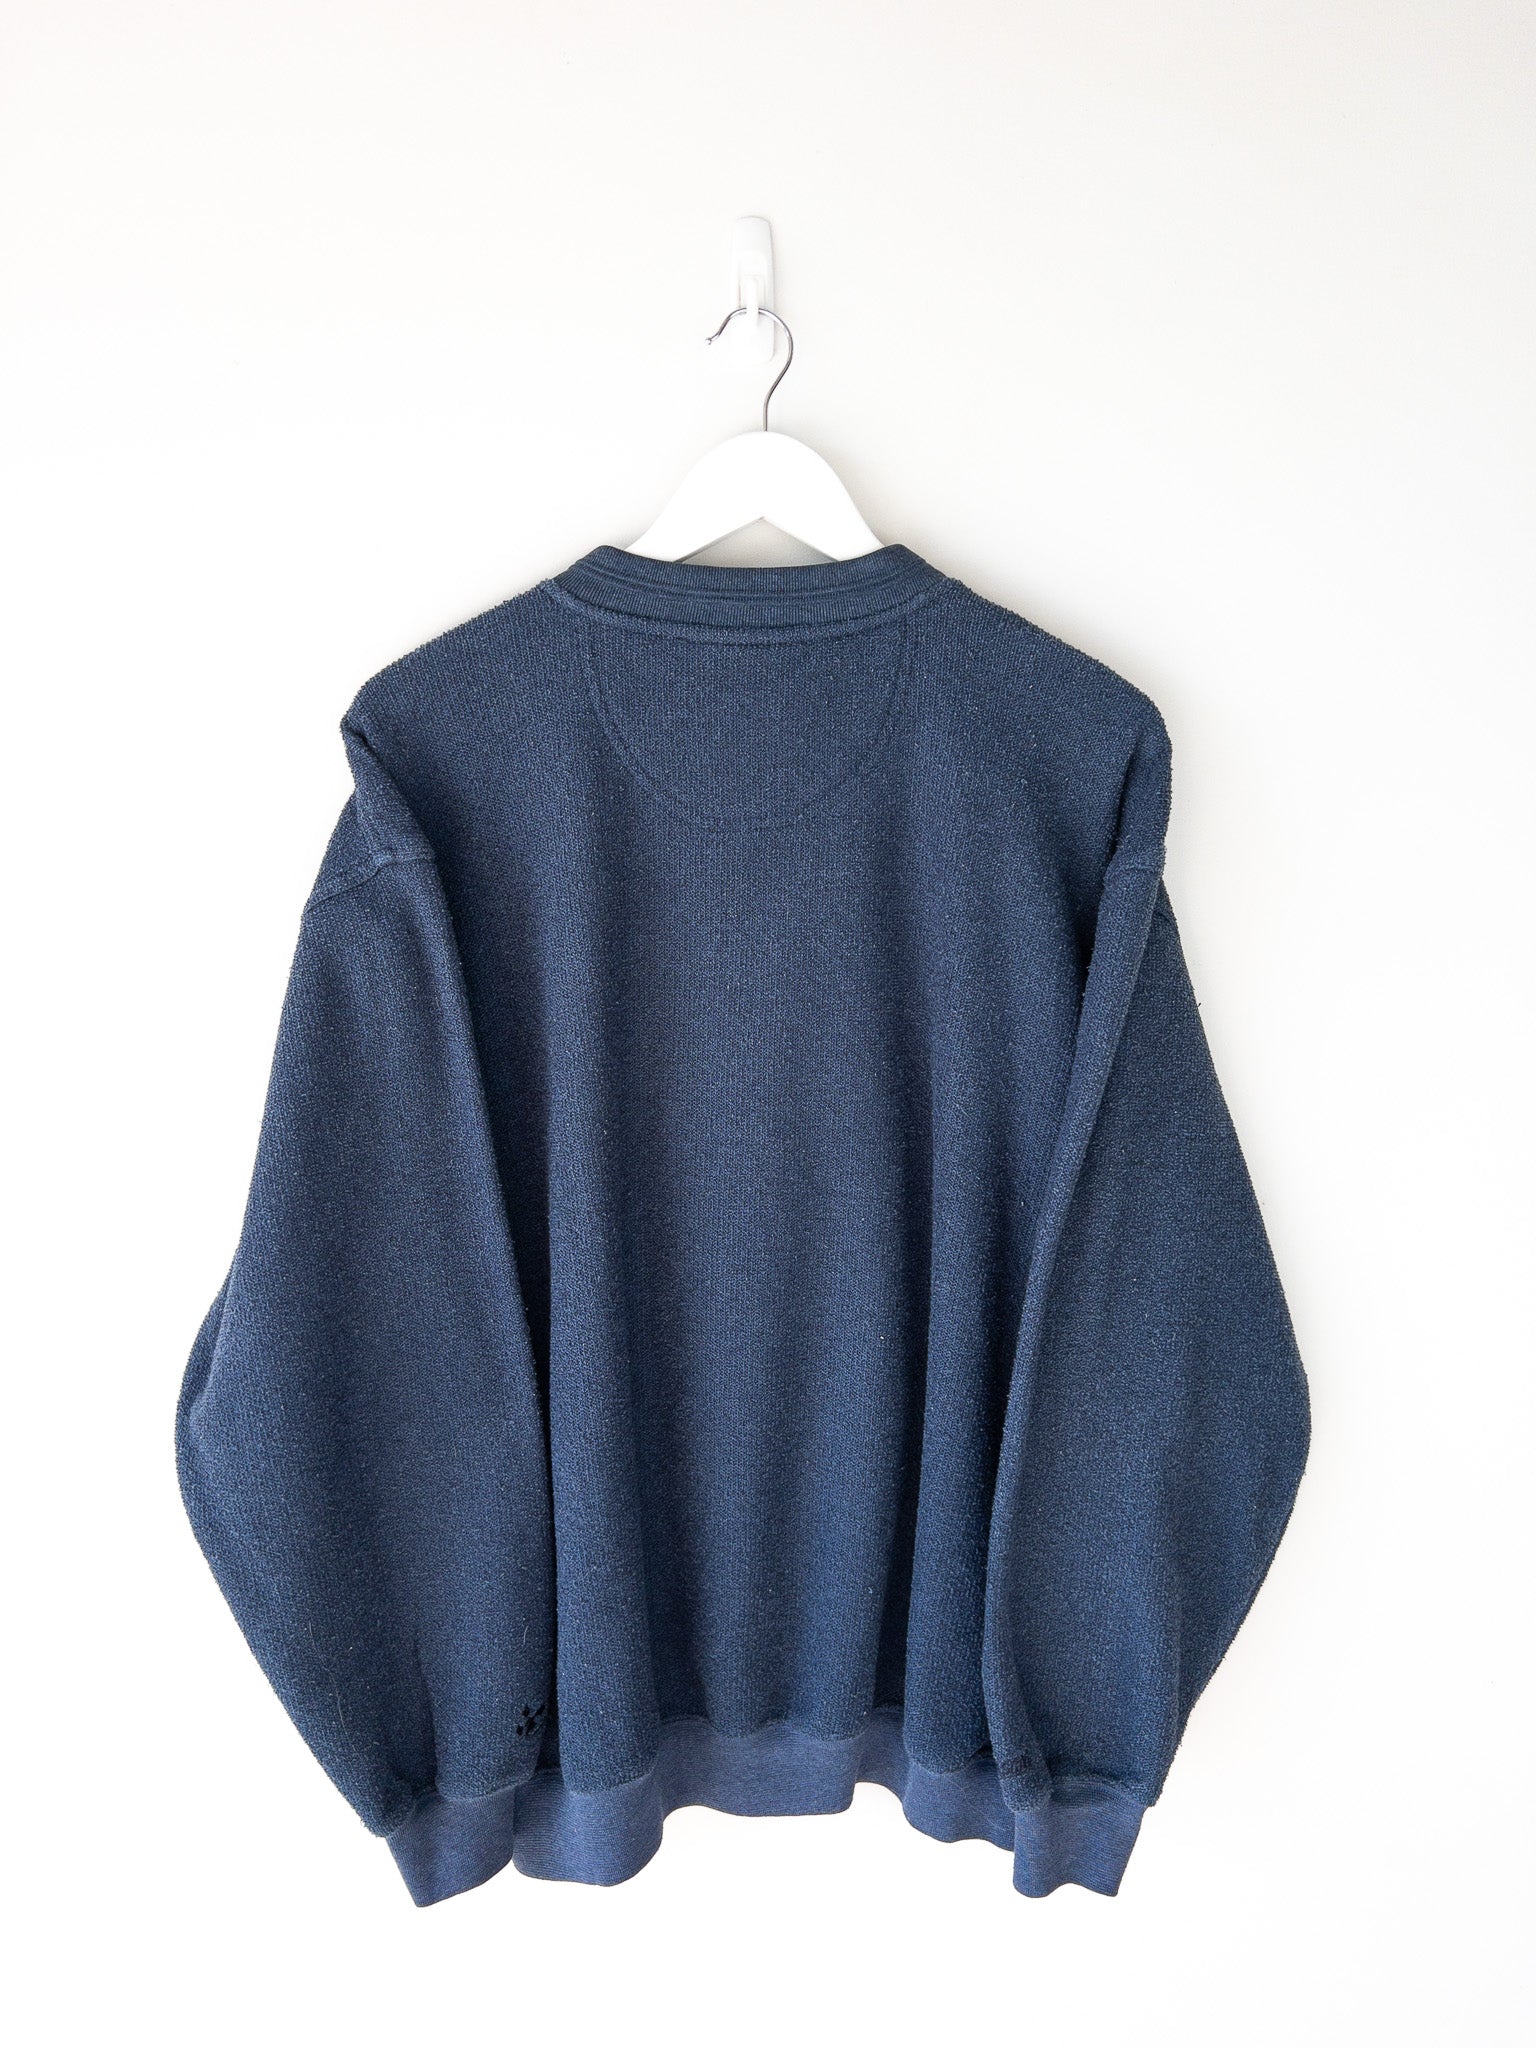 Vintage Jeff Gordon Sweatshirt (XL)